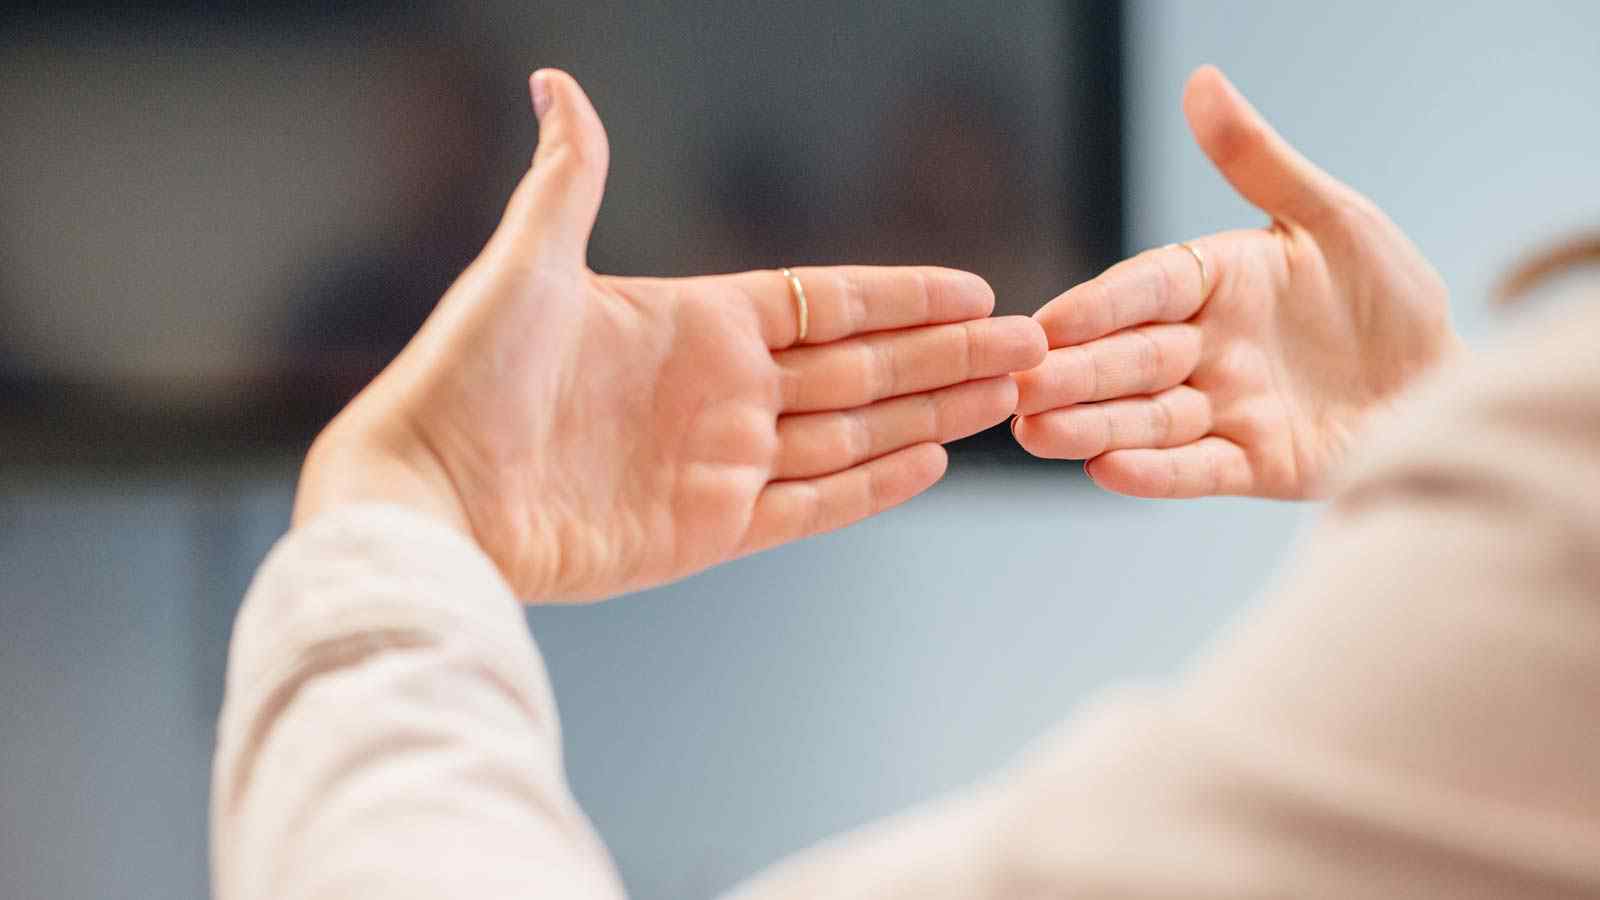 Hands signing in British Sign Language 